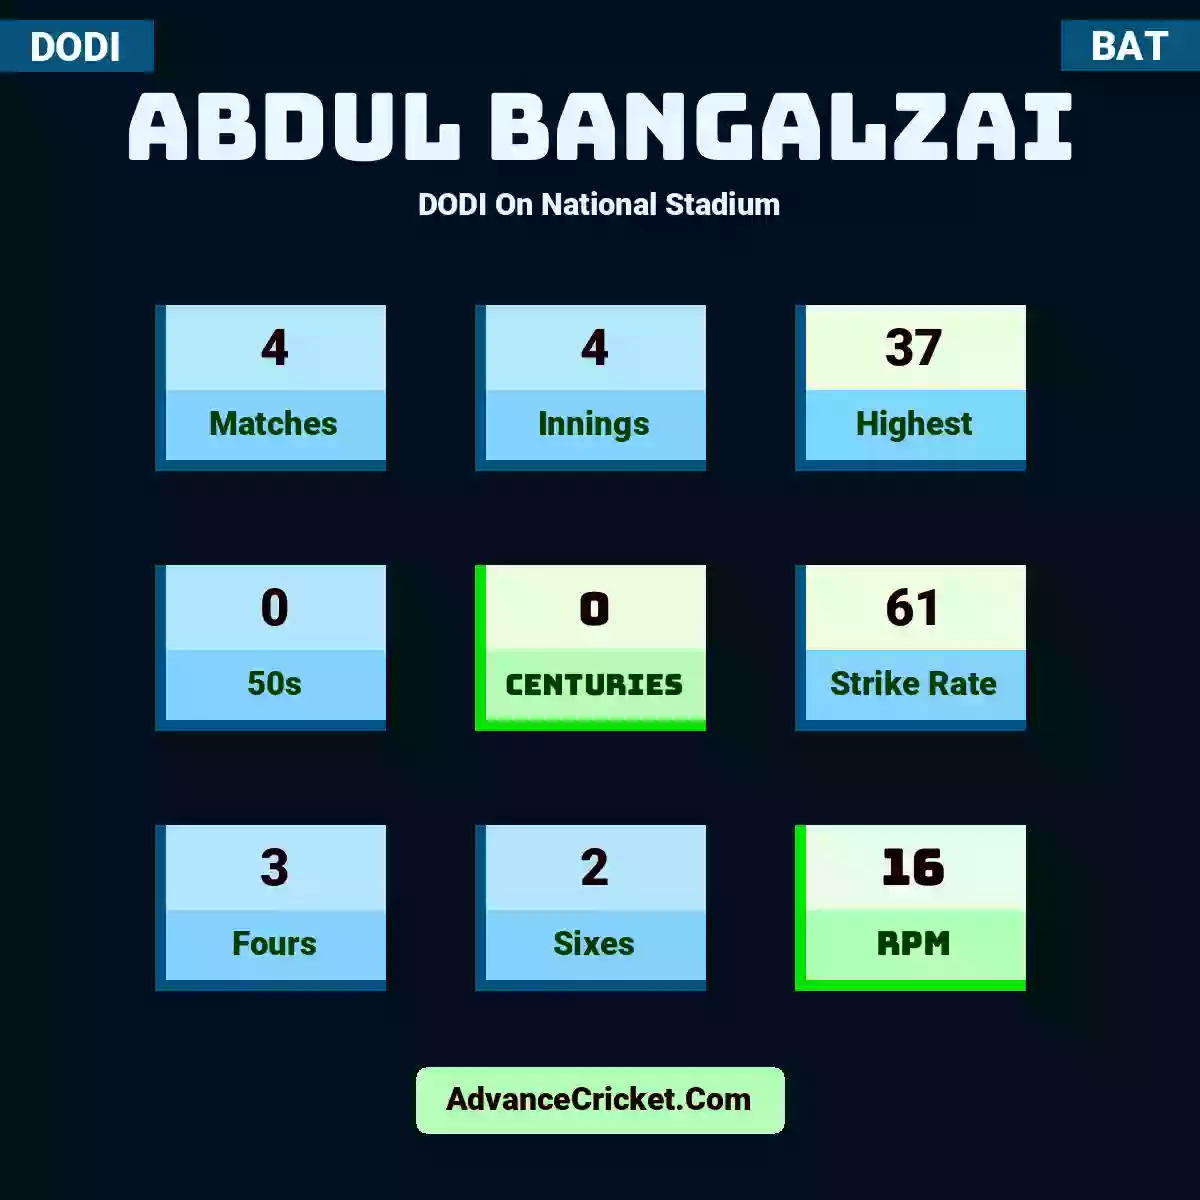 Abdul Bangalzai DODI  On National Stadium, Abdul Bangalzai played 4 matches, scored 37 runs as highest, 0 half-centuries, and 0 centuries, with a strike rate of 61. A.Bangalzai hit 3 fours and 2 sixes, with an RPM of 16.